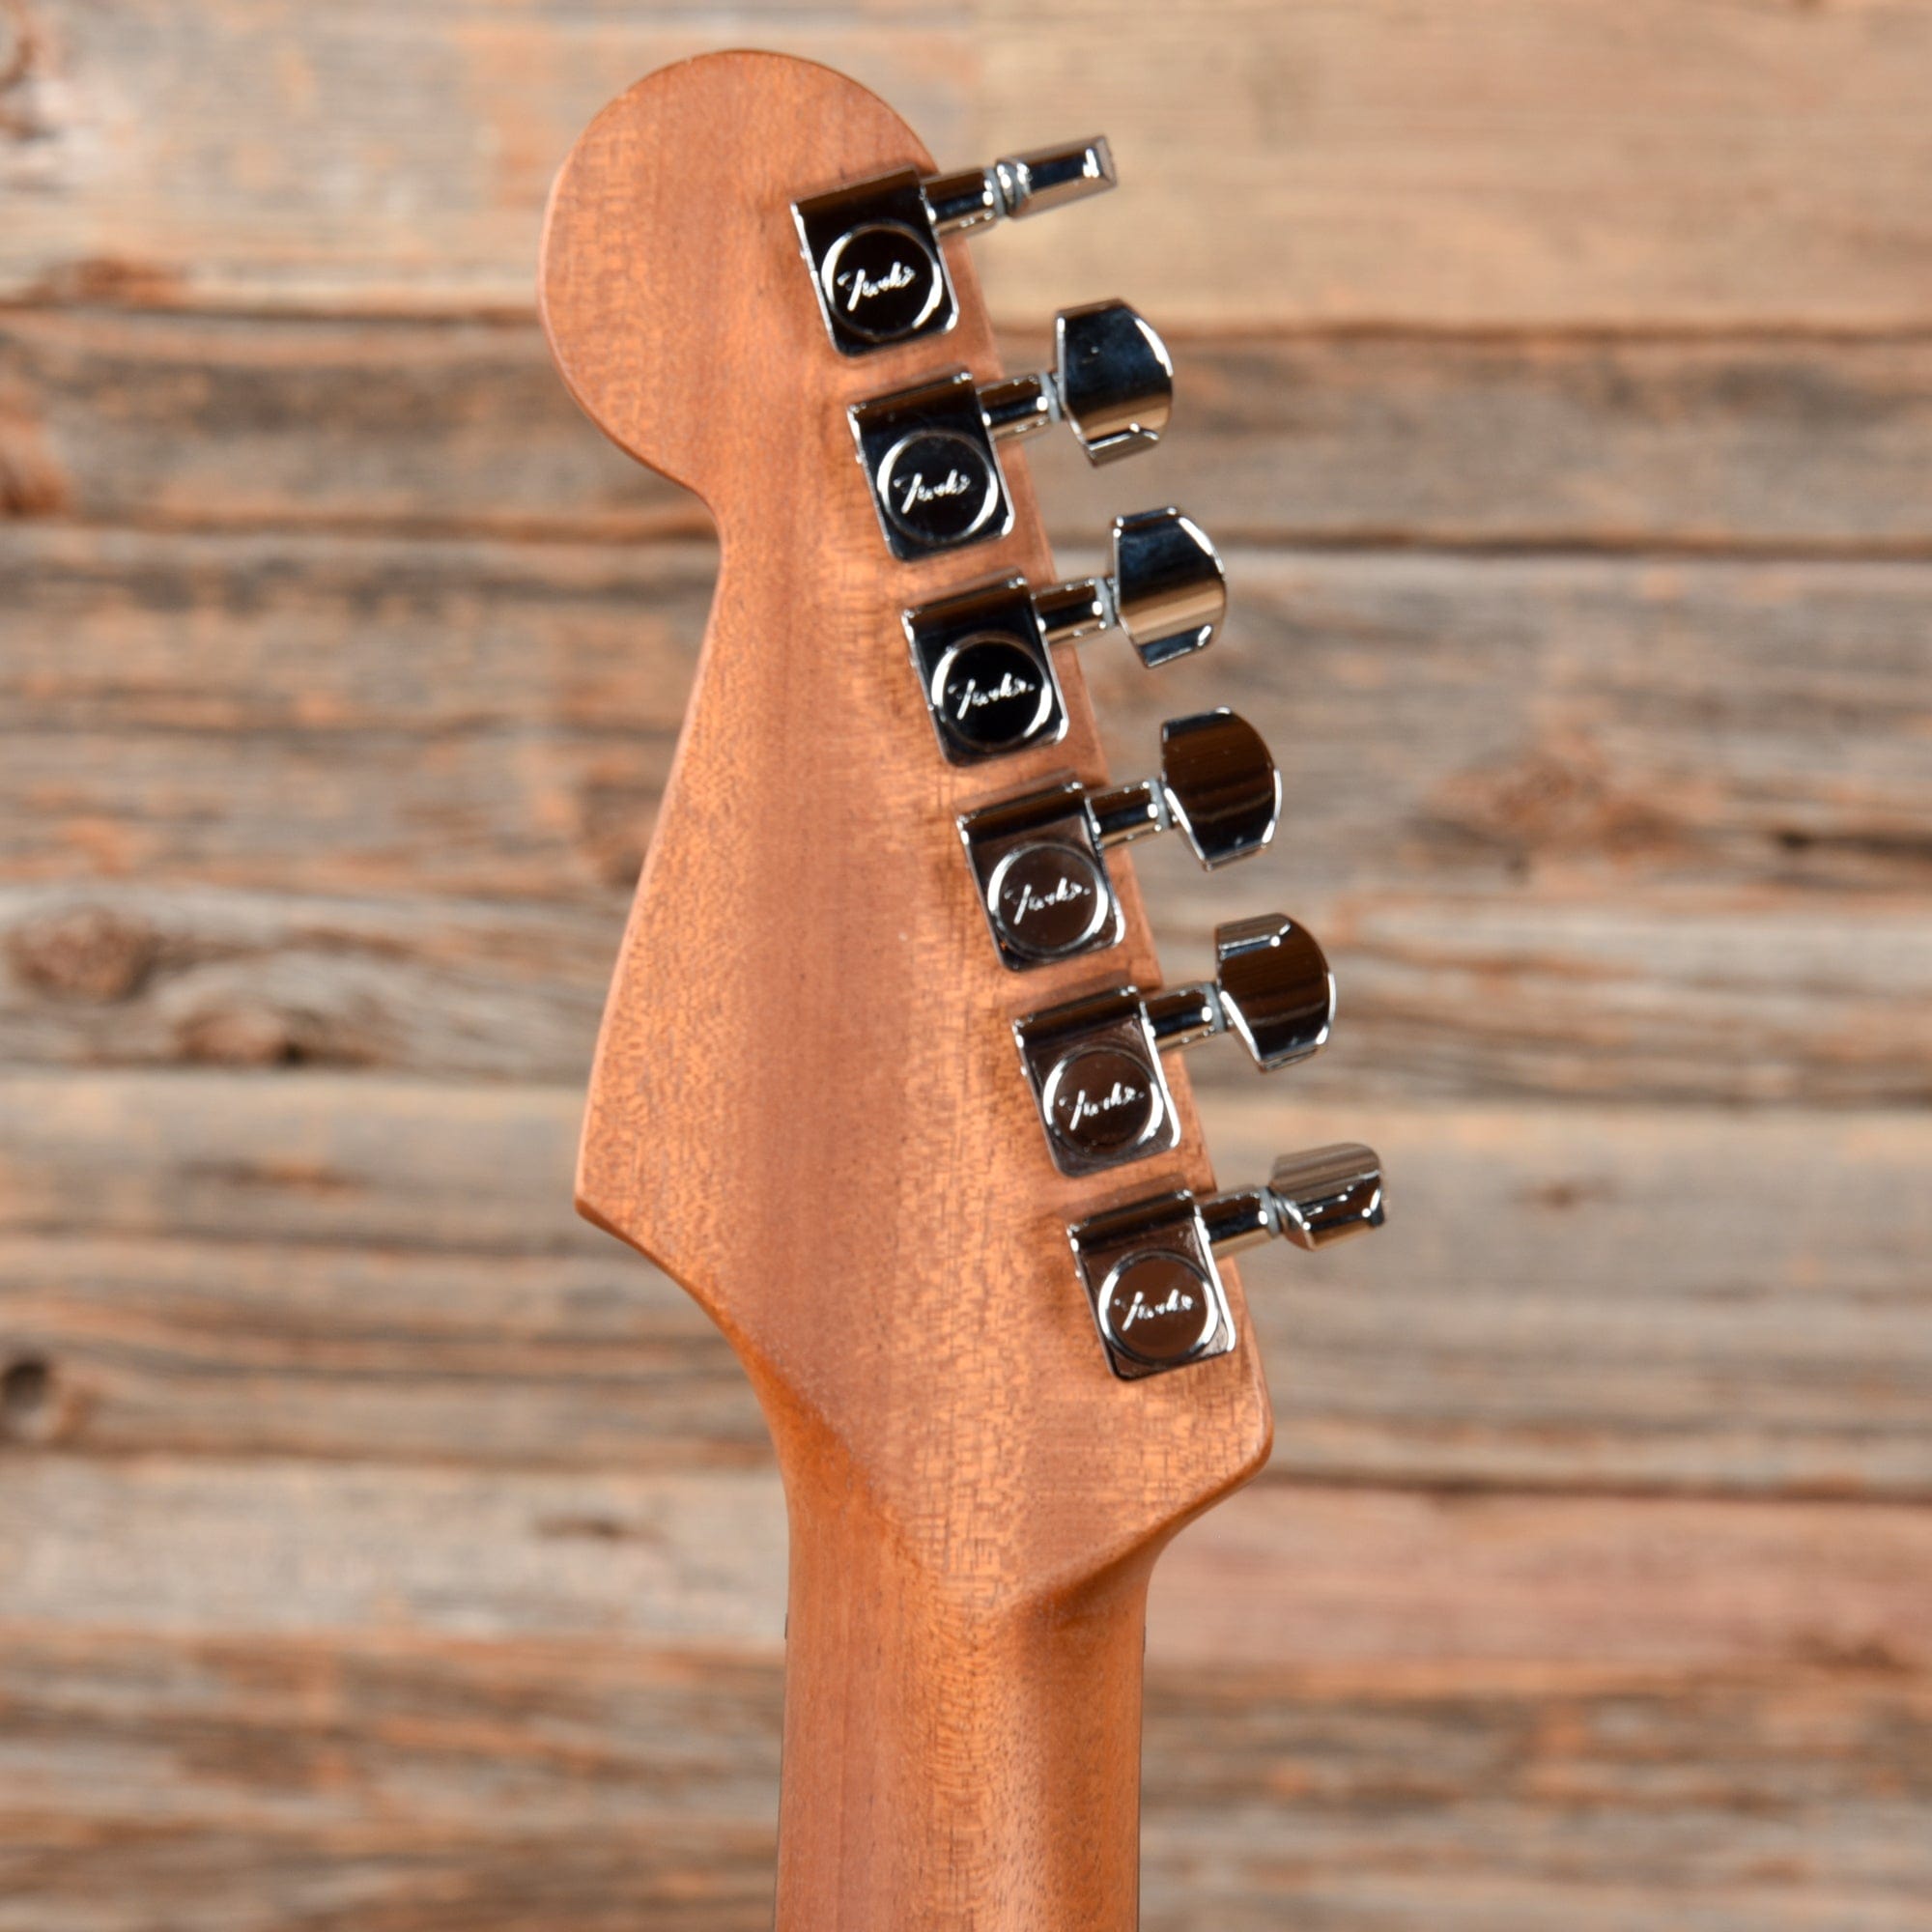 Fender American Acoustasonic Stratocaster Black 2020 Acoustic Guitars / Built-in Electronics